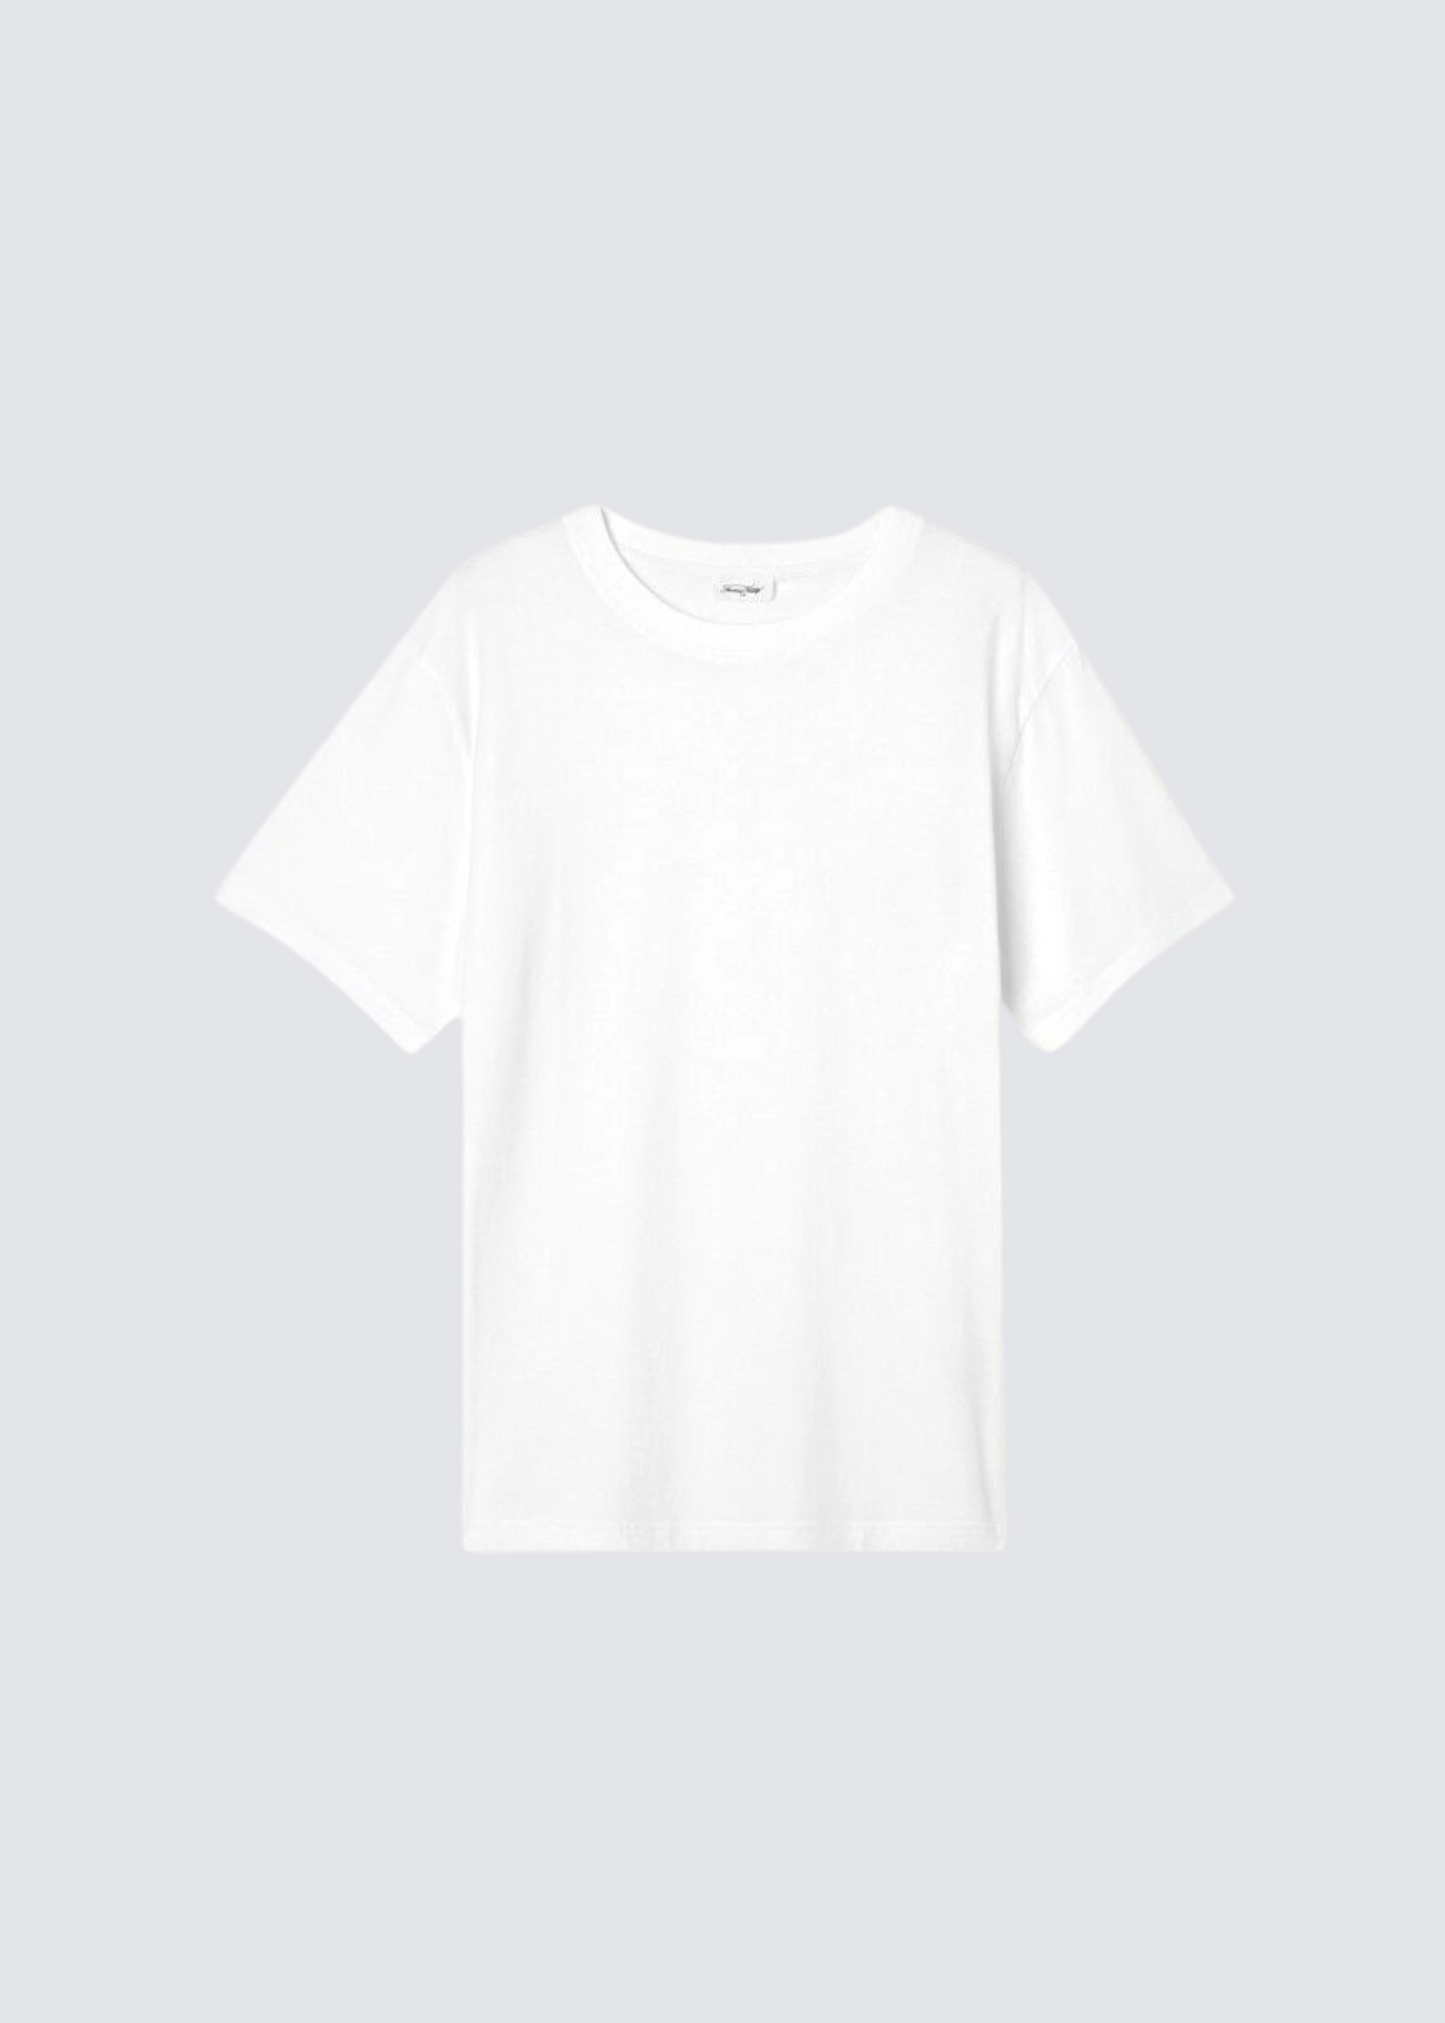 Vupaville, Blanc, Herren T-Shirt